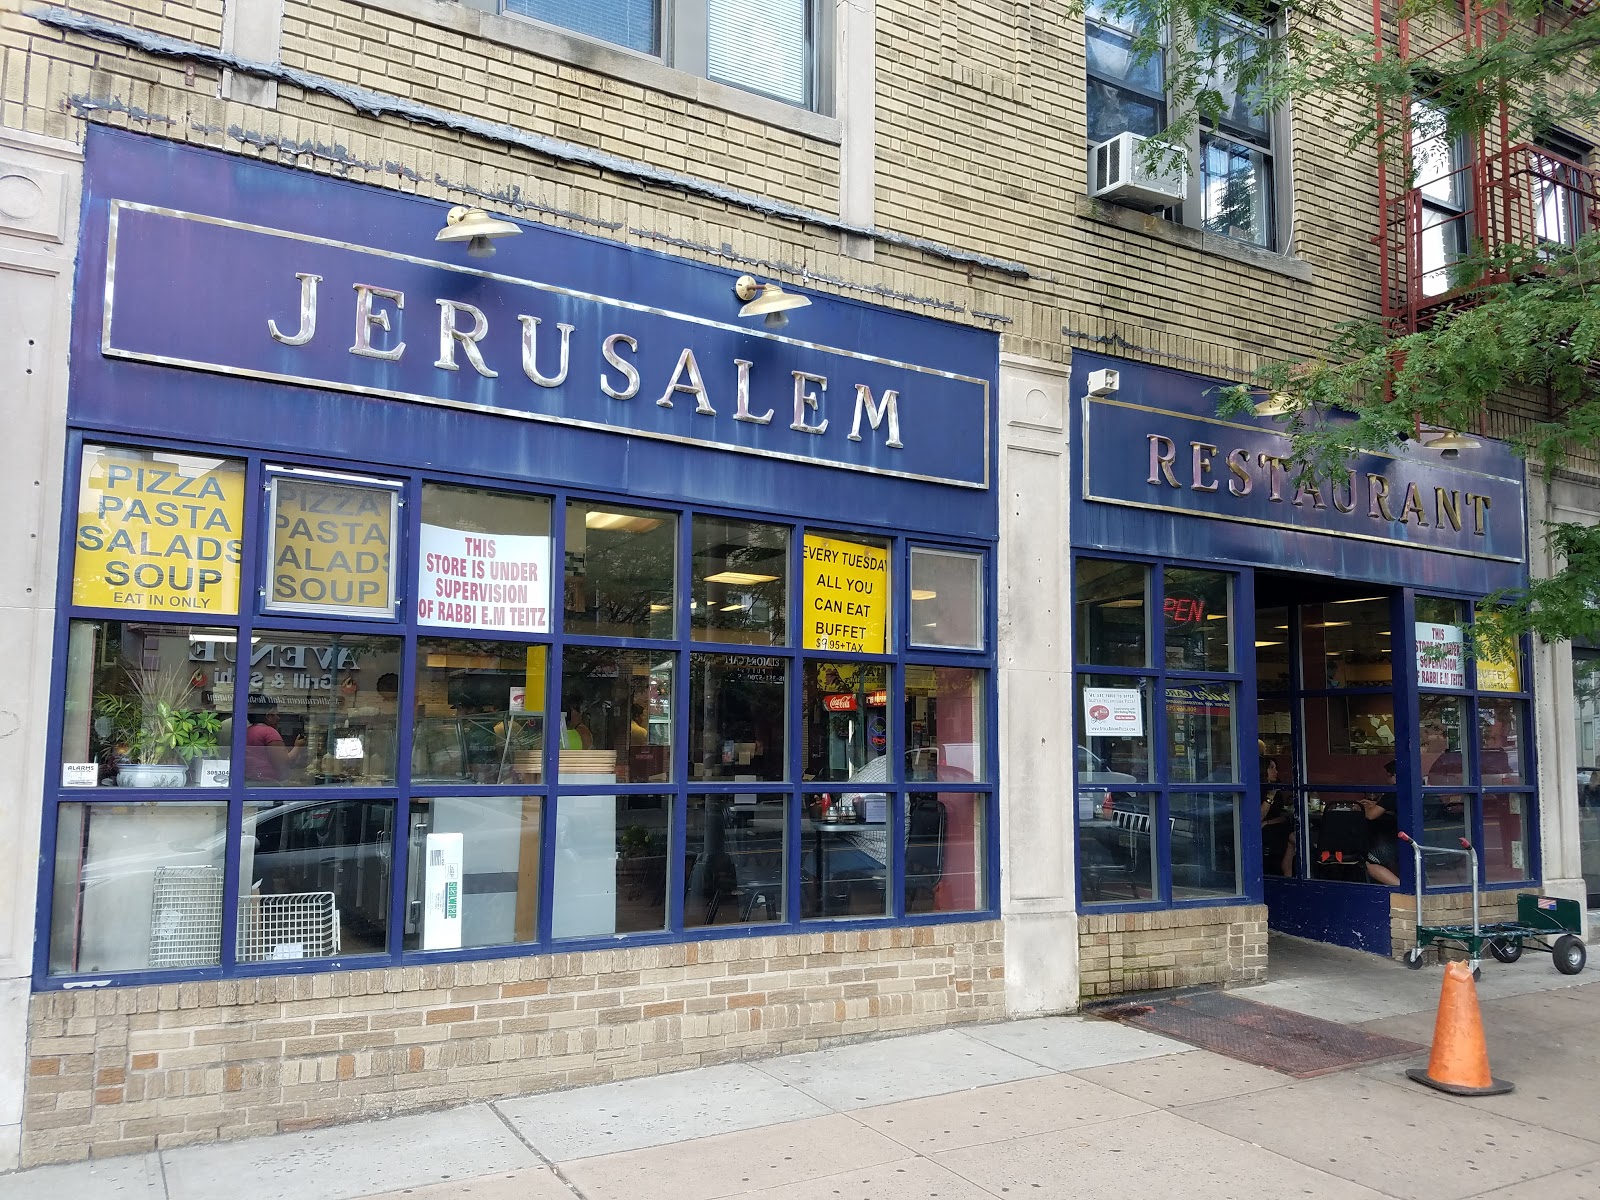 Photo of Jerusalem Restaurant in Elizabeth City, New Jersey, United States - 1 Picture of Restaurant, Food, Point of interest, Establishment